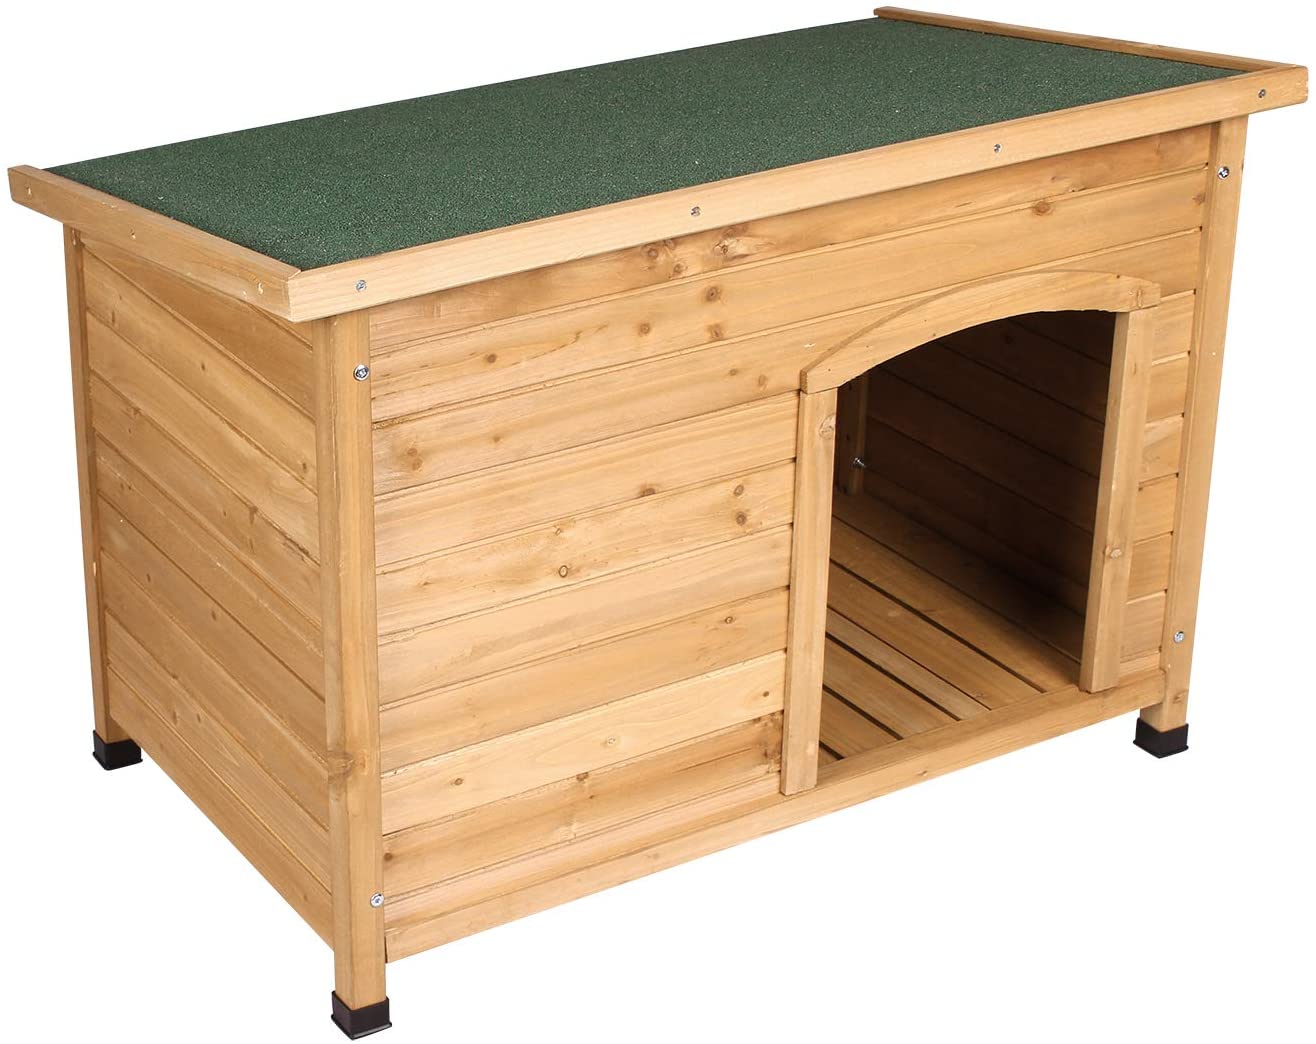  Elightry Caseta de Perros para Exterior Casa para Perro de Madera Resistente Impermeable 103 x 66 x 71cm YDMGL0001 